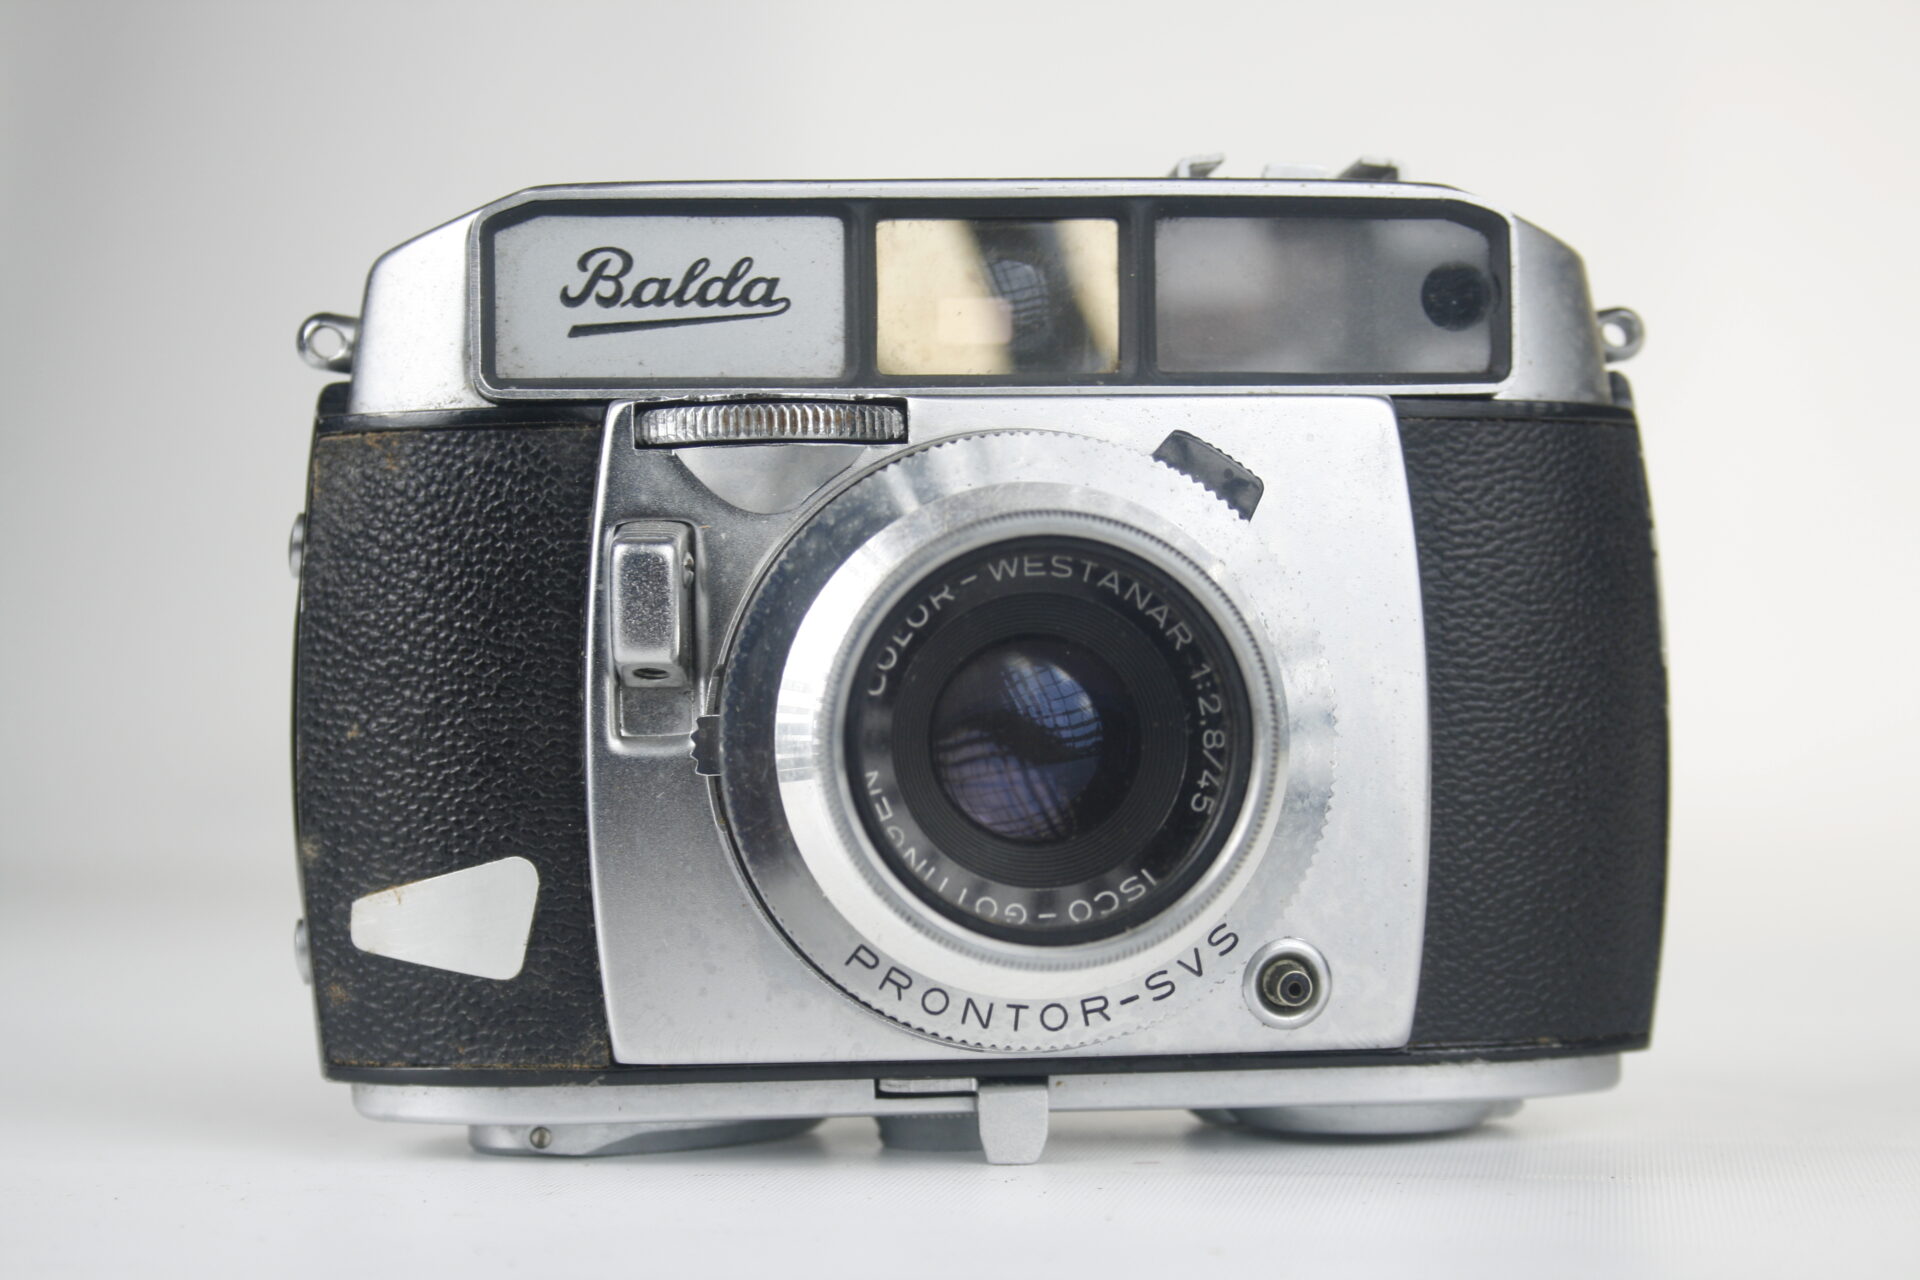 Balda Baldessa Ia viewfinder camera. 35mm film. 1958. Duitsland.